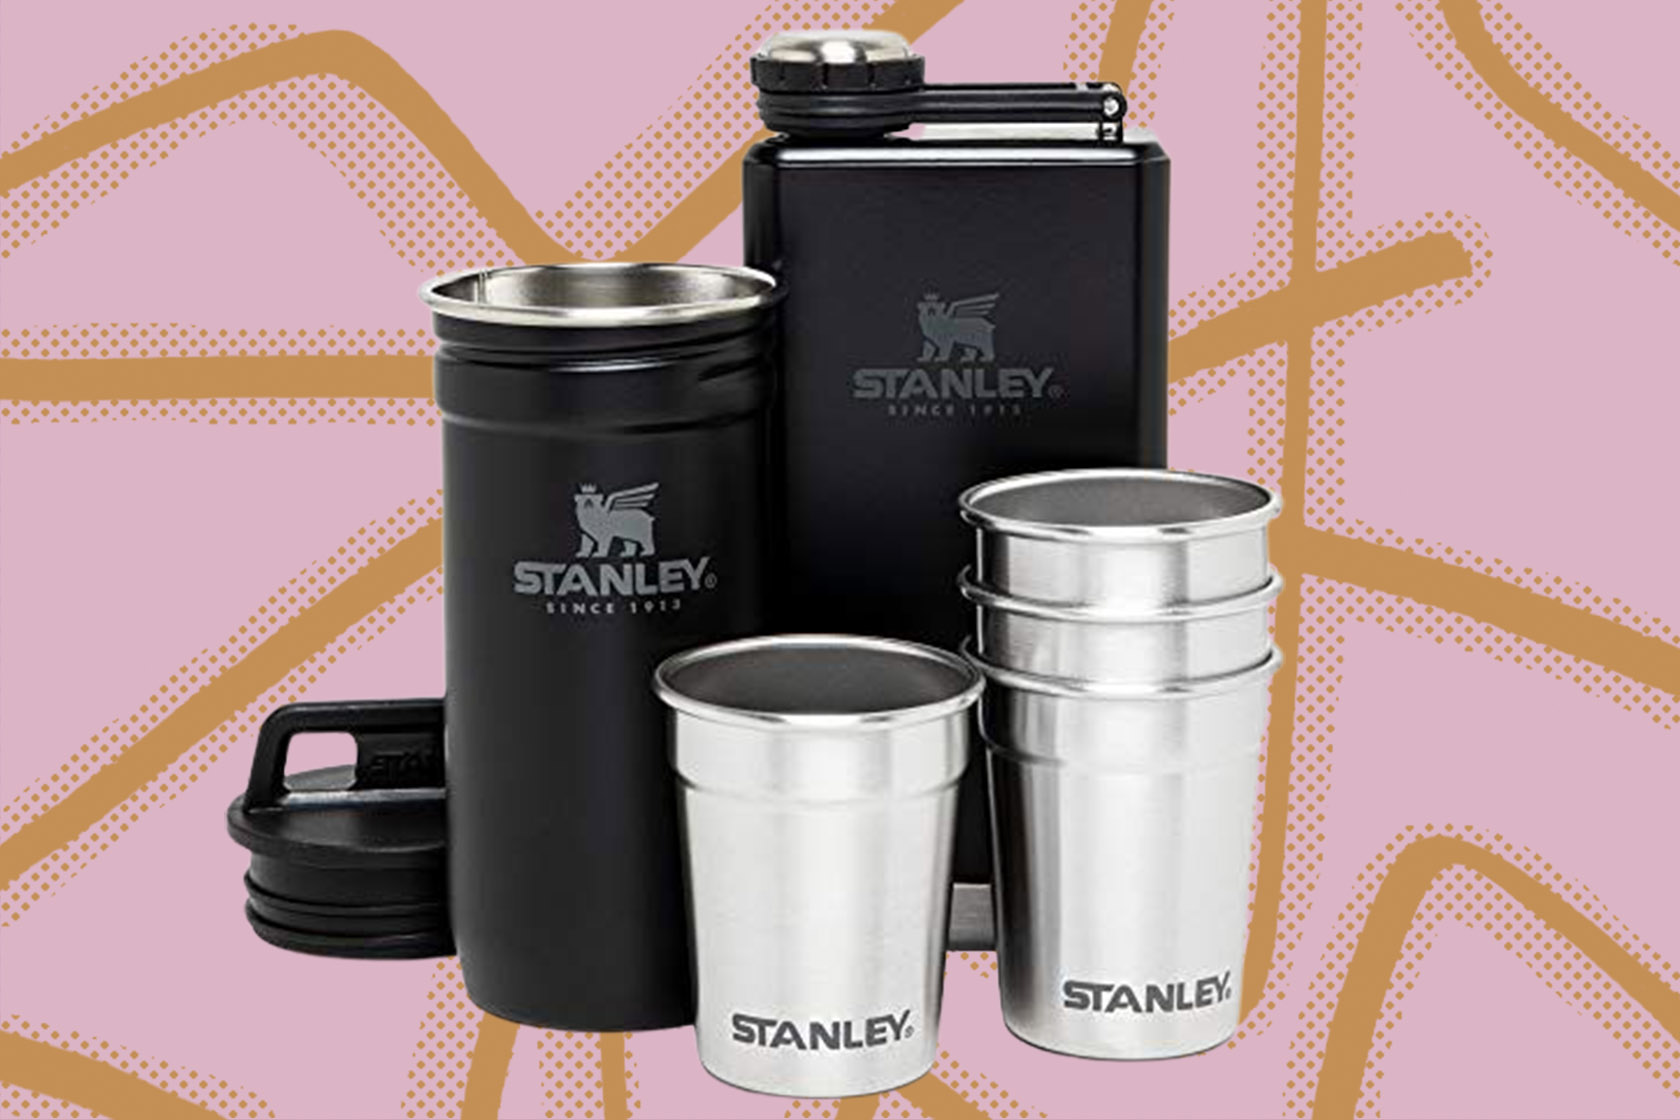 Stanley Adventure Steel Shots and Flask Gift Set Sale 2021